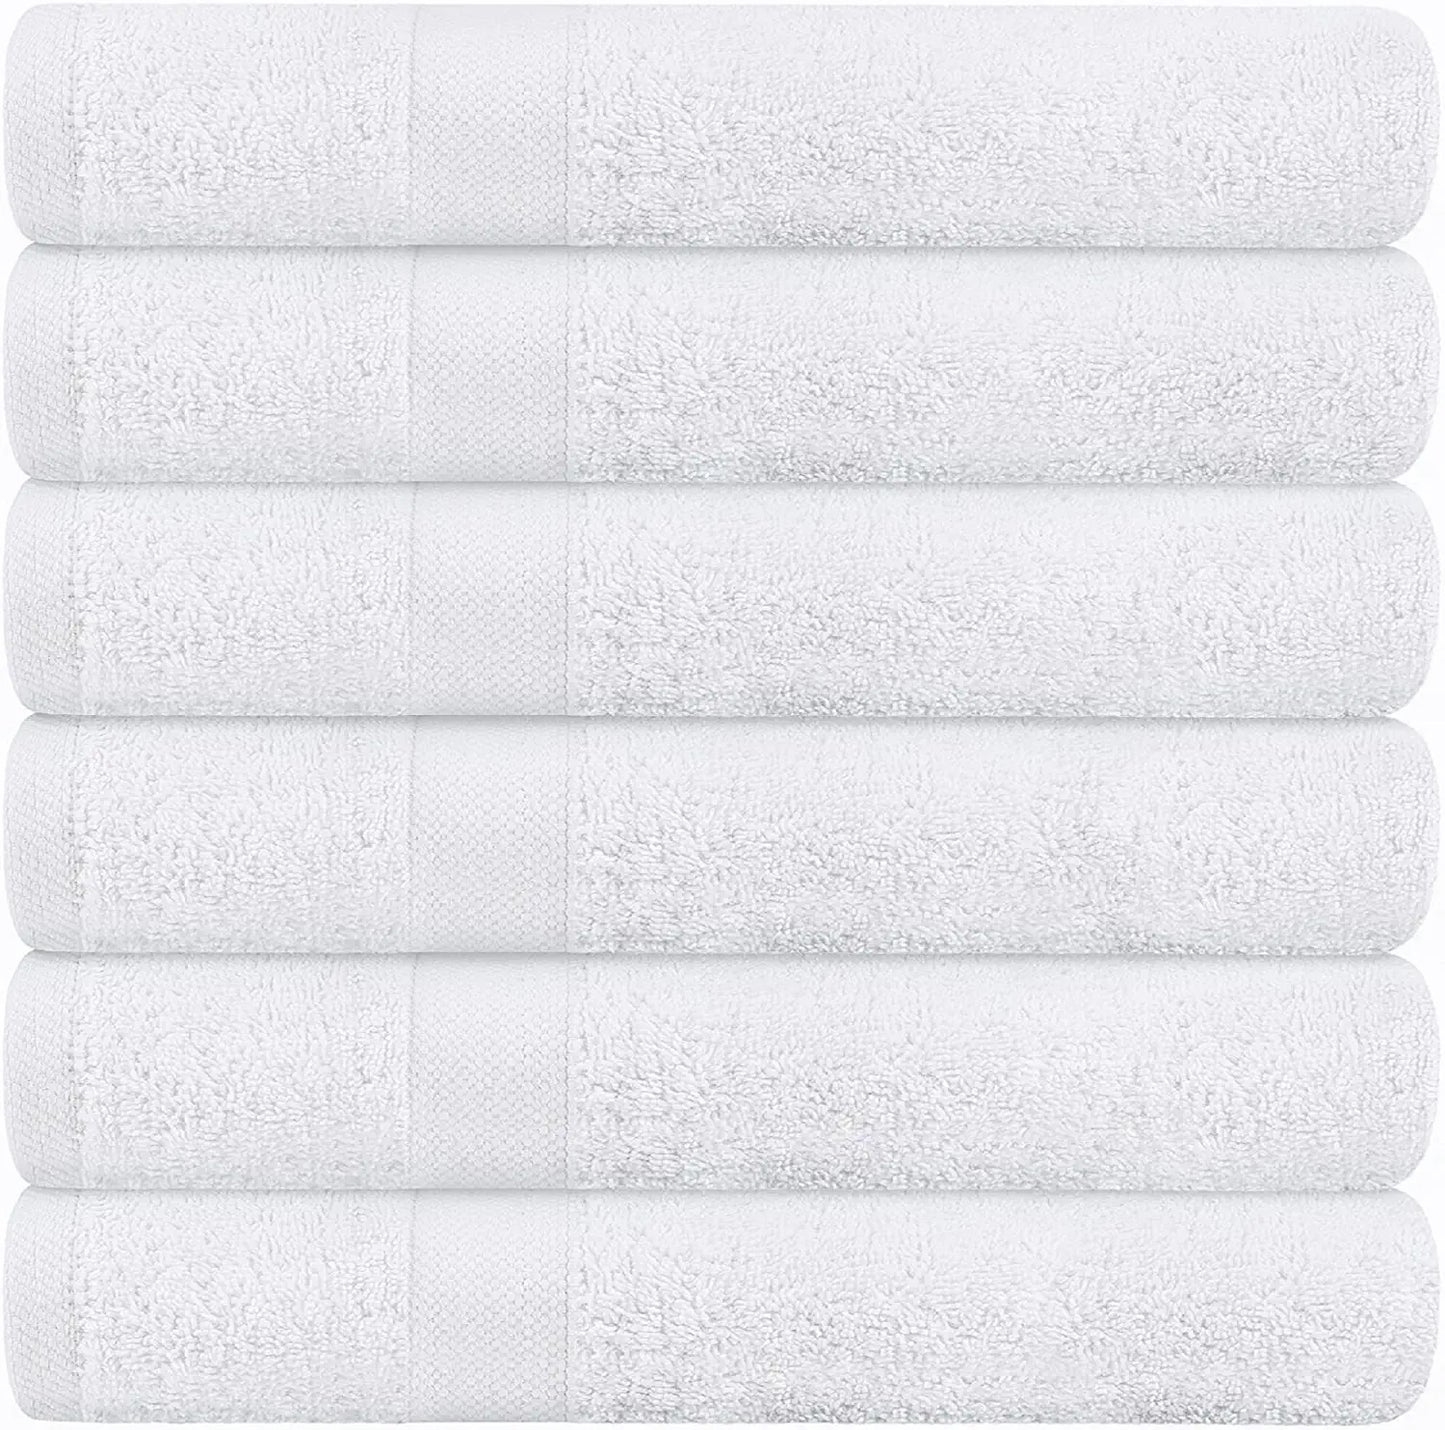 white small bath towels